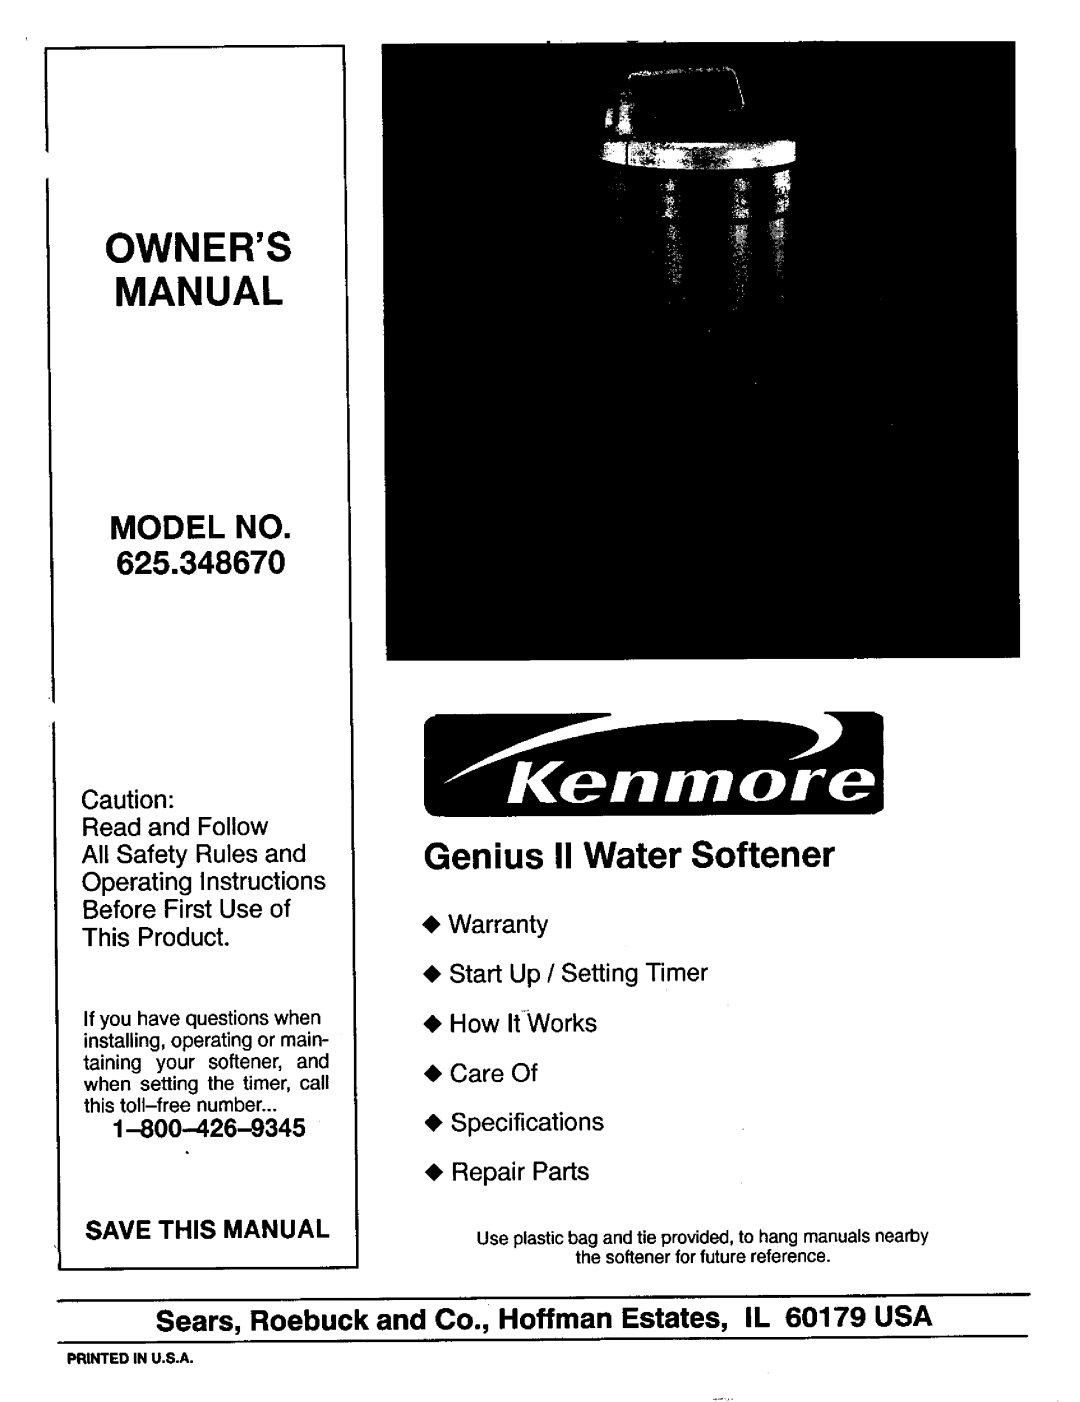 Kenmore 625.34867 owner manual Genius II Water Softener, Model No, Sears, Roebuck and Co., Hoffman Estates, IL 60179 USA 